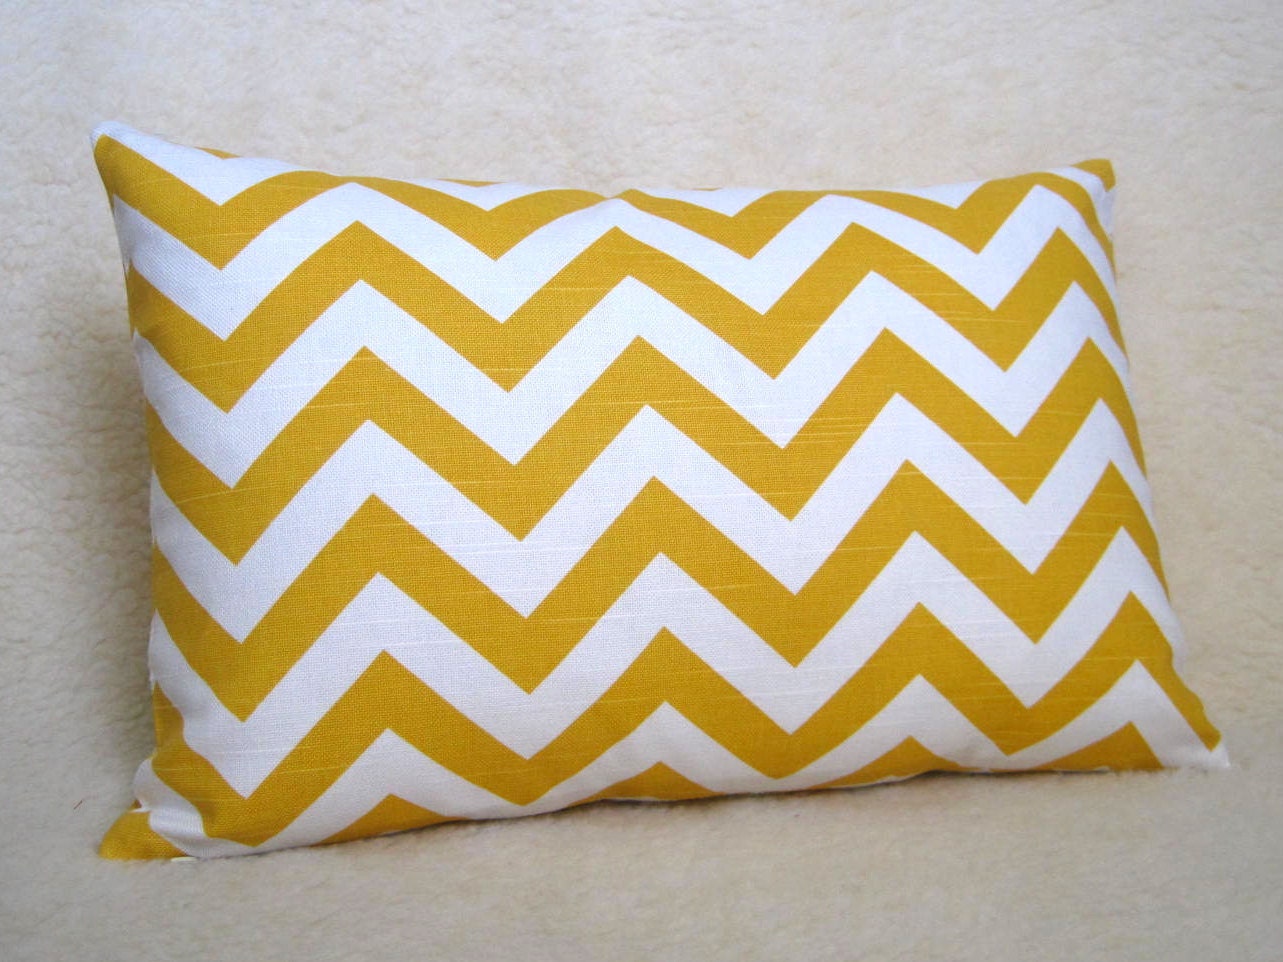 Chevron Print Lumbar Pillow / Sunshine Yellow / 12x18 inch / Pattern on Both Sides / Zipper Enclosure